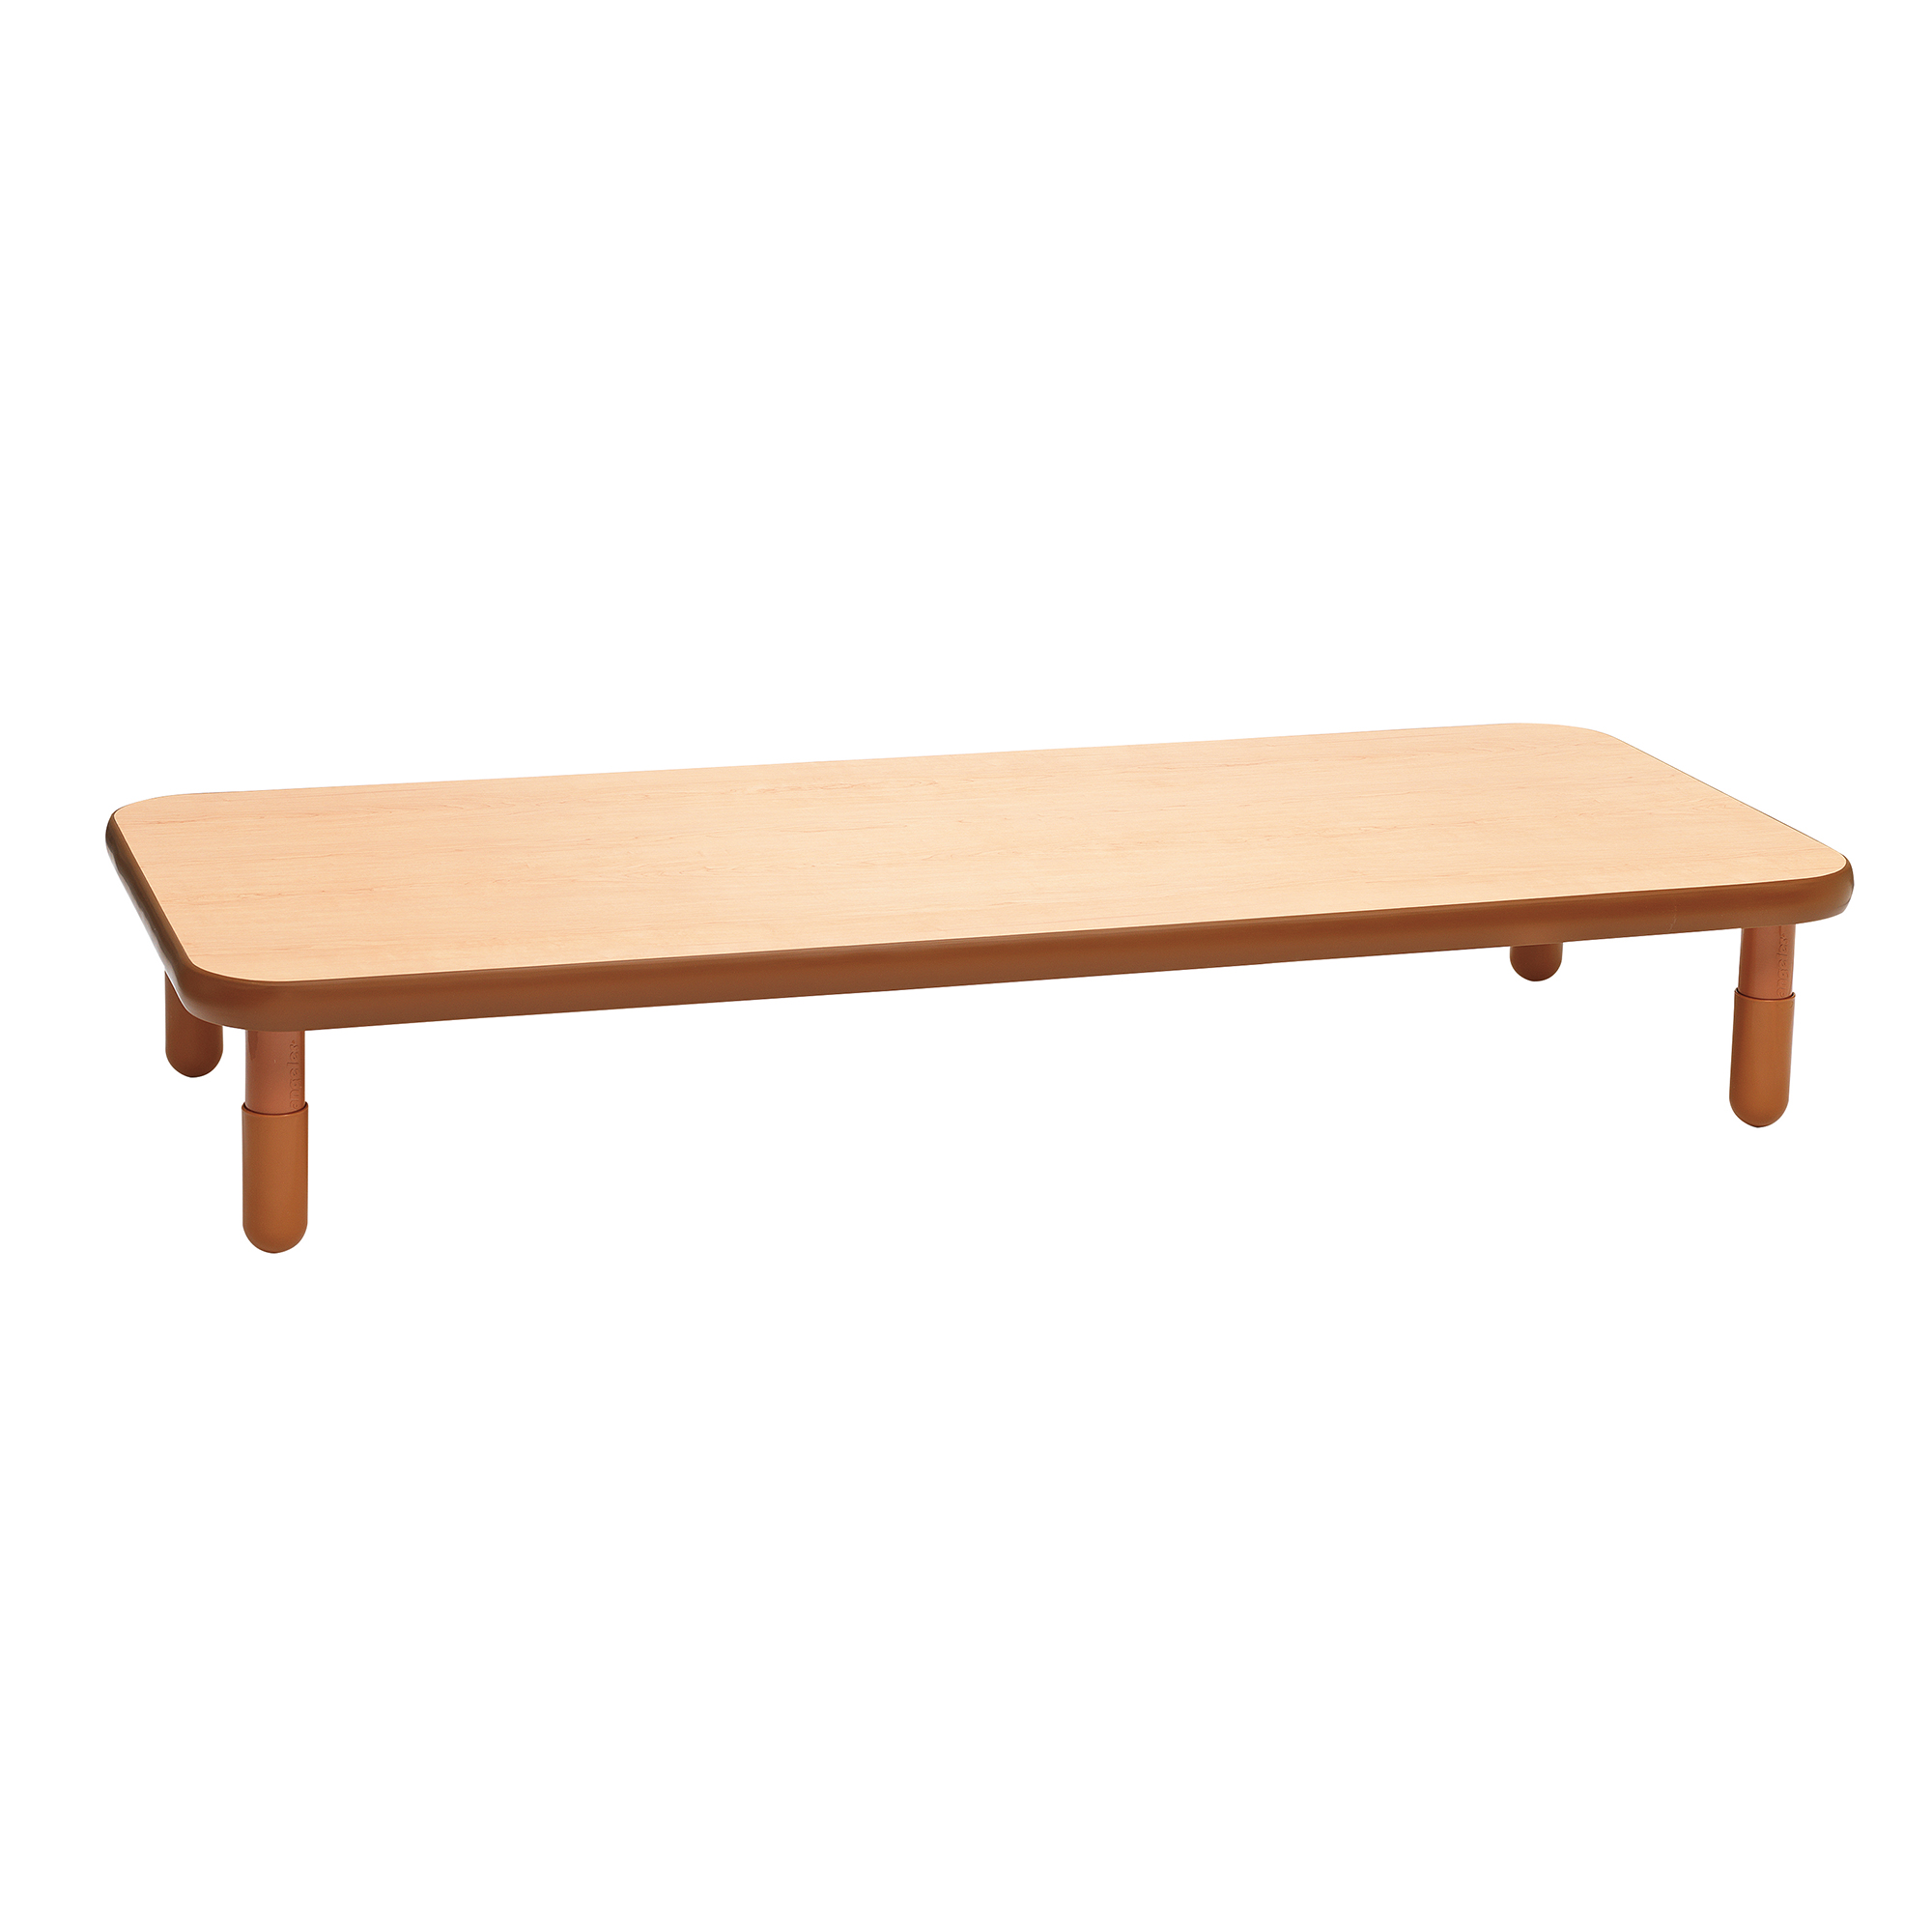 BaseLine® 183 cm  x 76 cm  Rectangular Table - Natural Wood with 30,5 cm  Legs